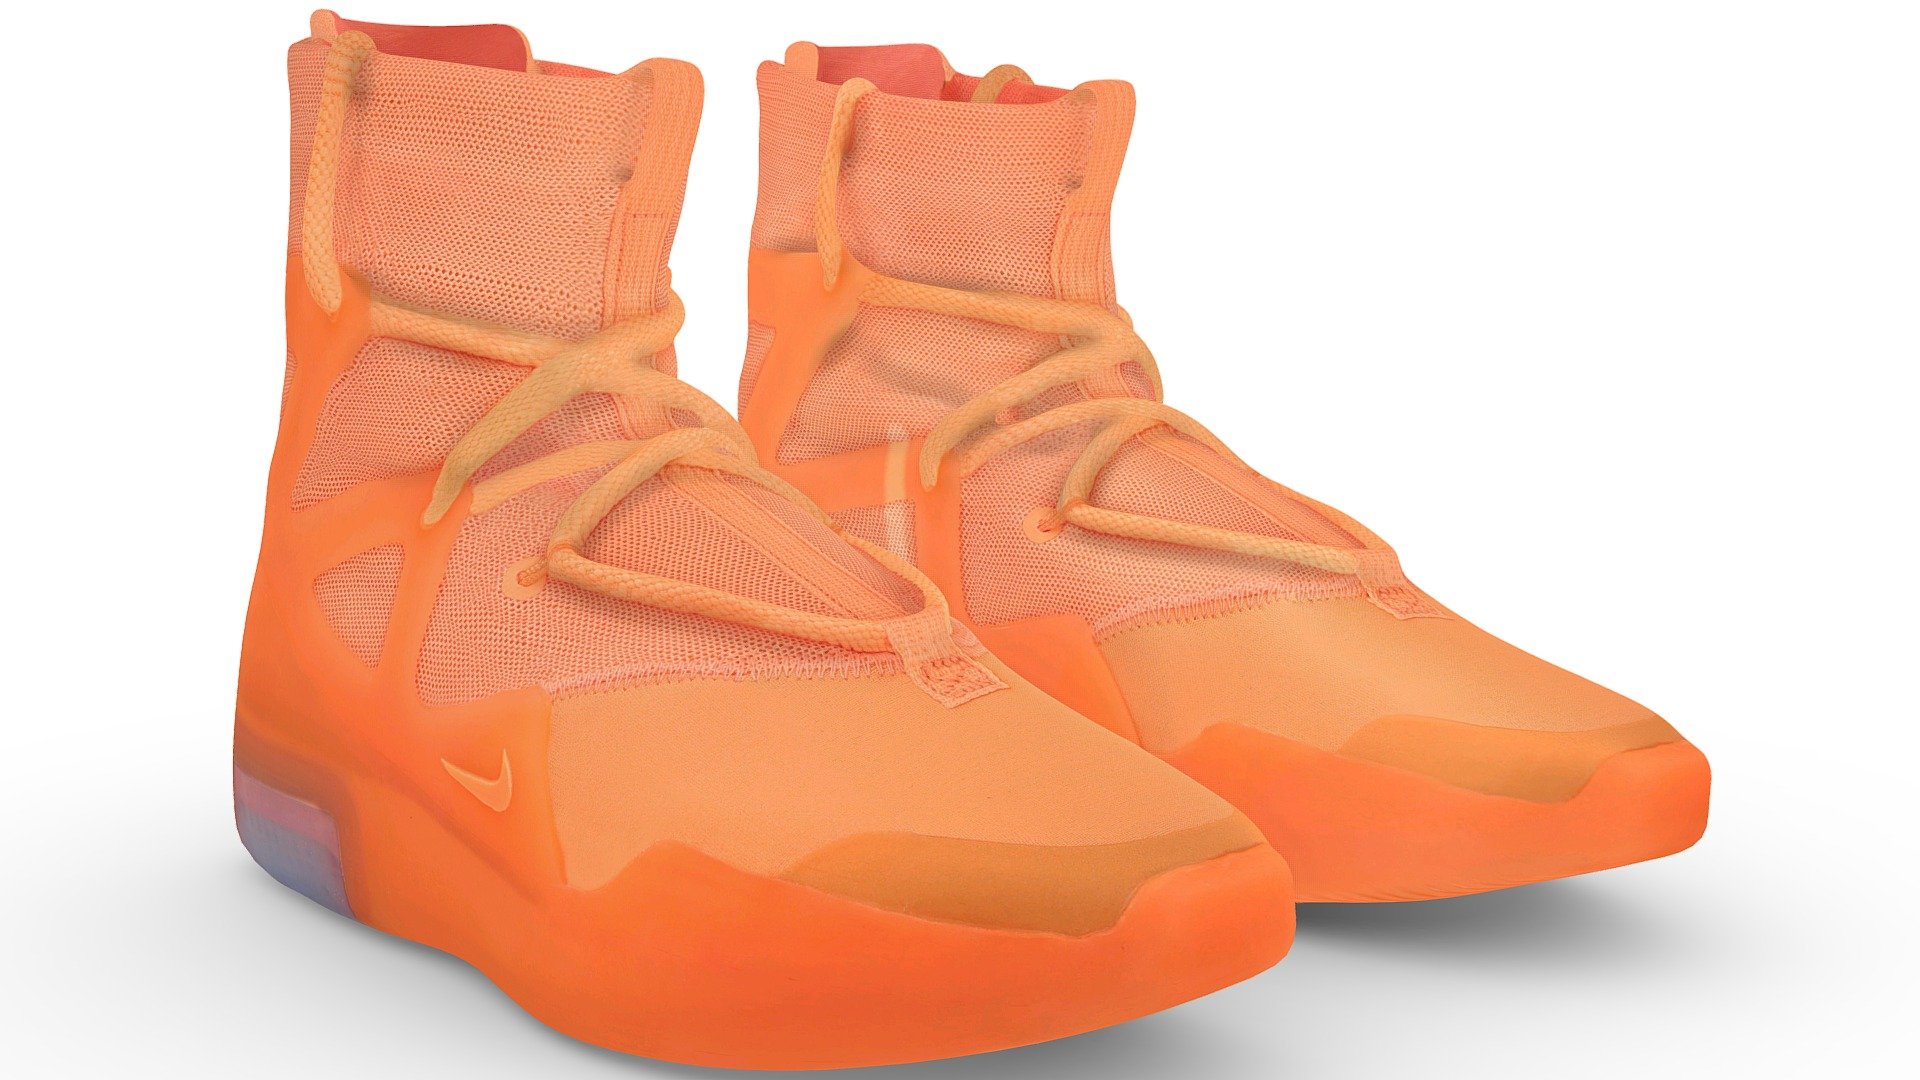 Respetuoso mero deslealtad Nike Air Fear Of God Orange Pulse FOG - Buy Royalty Free 3D model by  Vincent Page (@vincentpage) [9dea466]